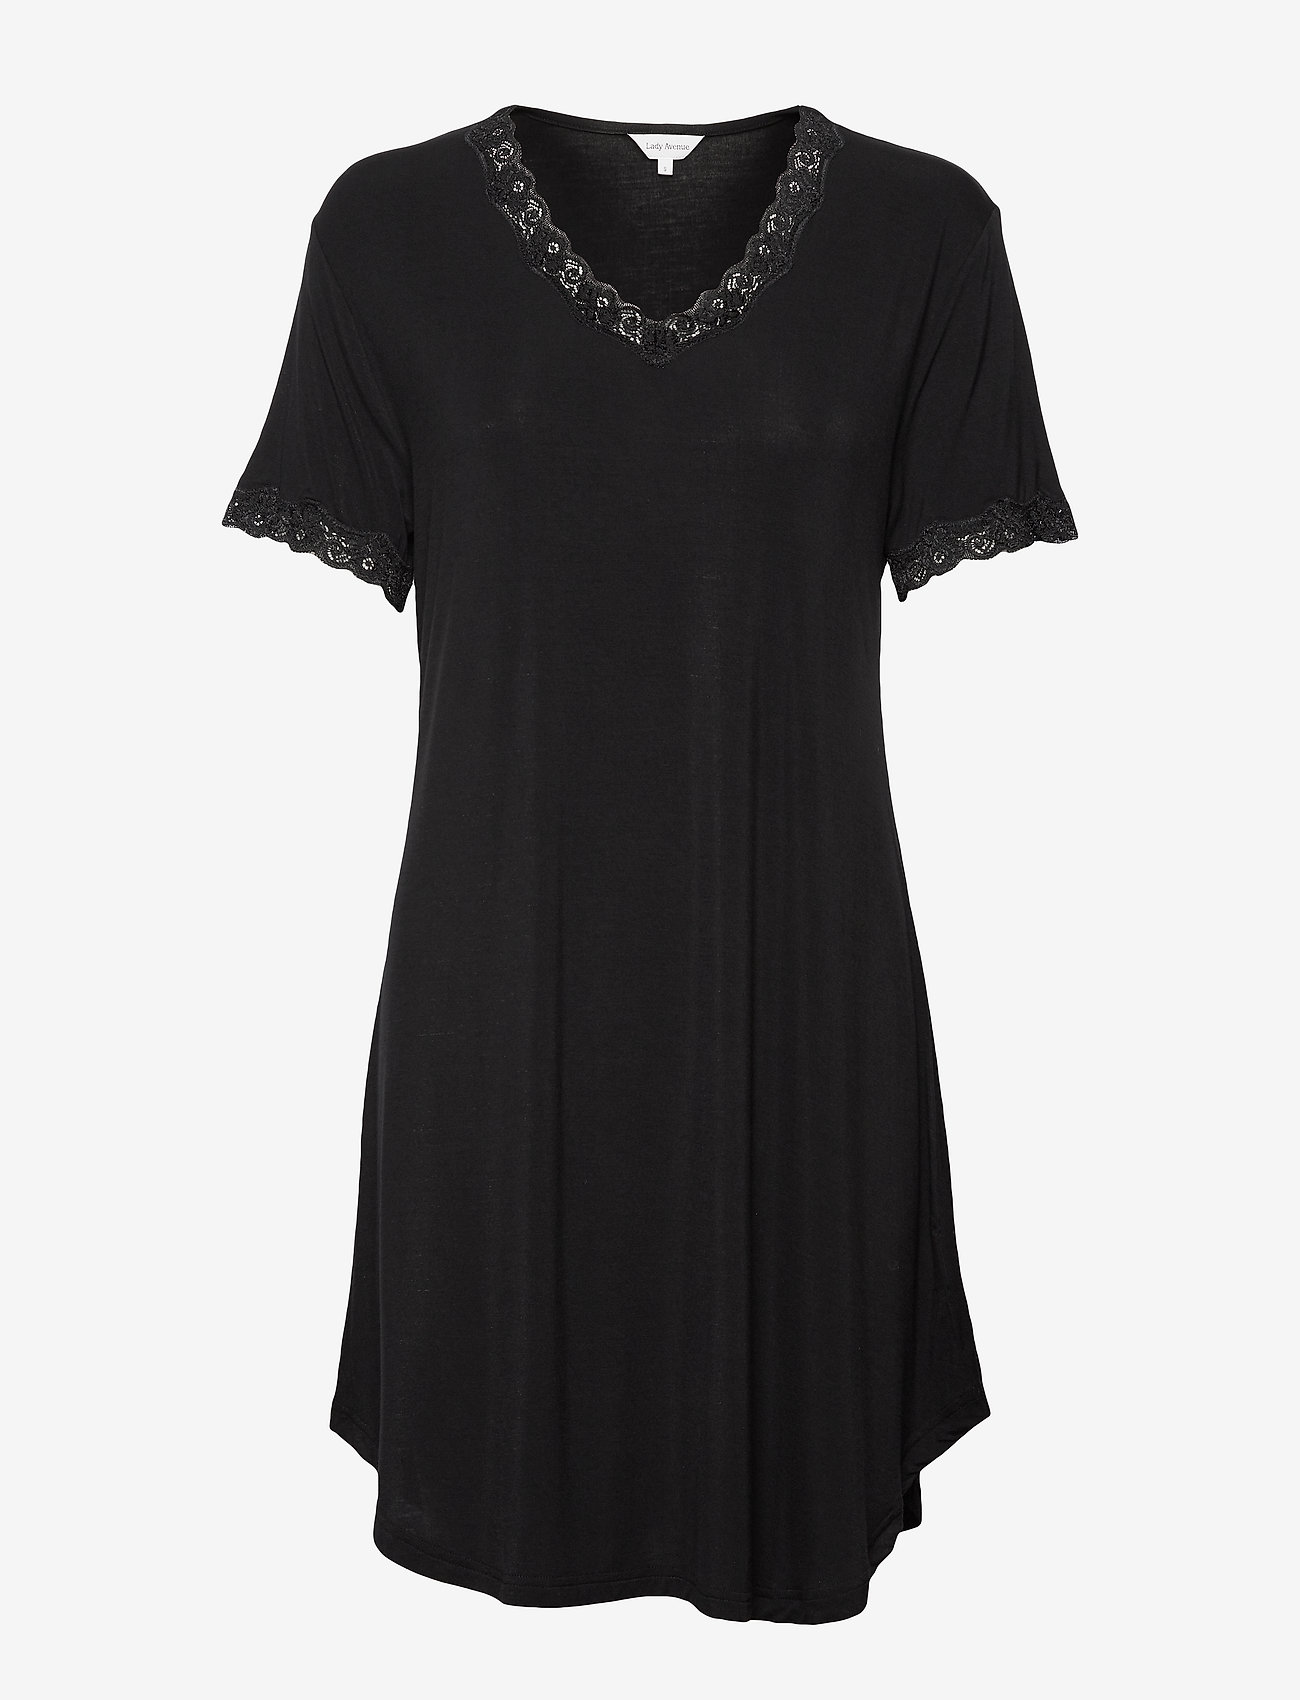 Lady Avenue - Bamboo short sleeve nightdress with - plus size - black - 0